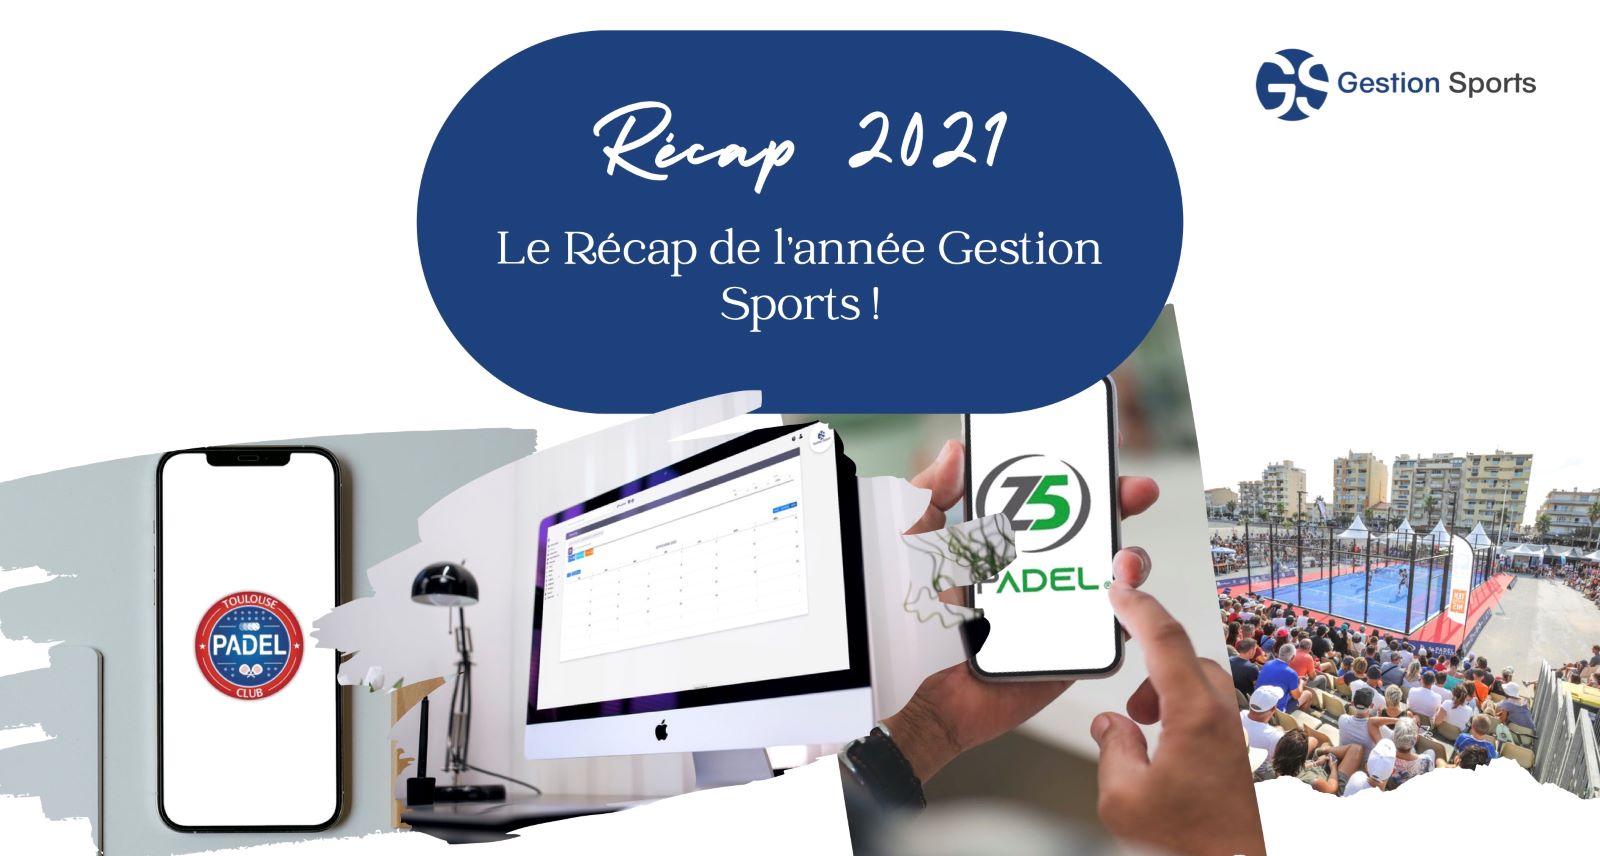 Gestion Sports: Årets sammanfattning 2021!